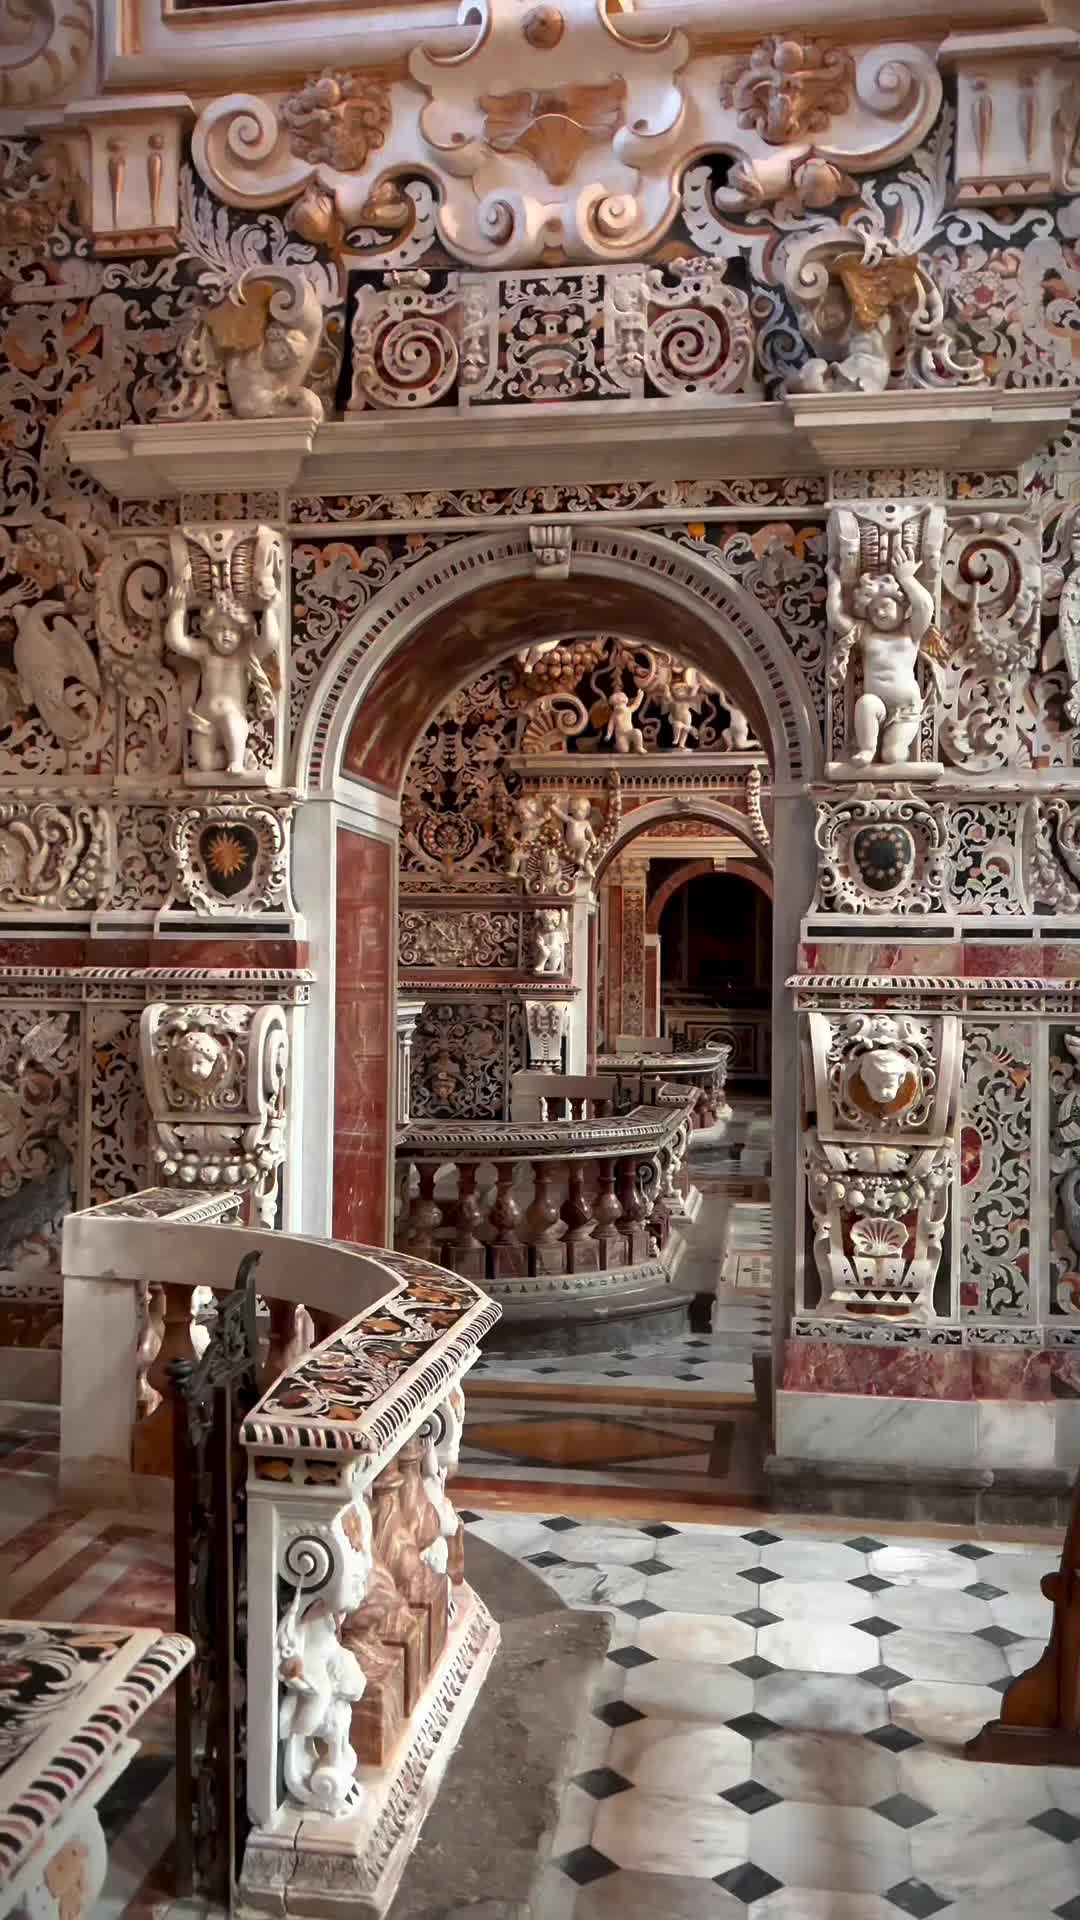 Discover Palermo's Marble Masterpiece at Casa Professa